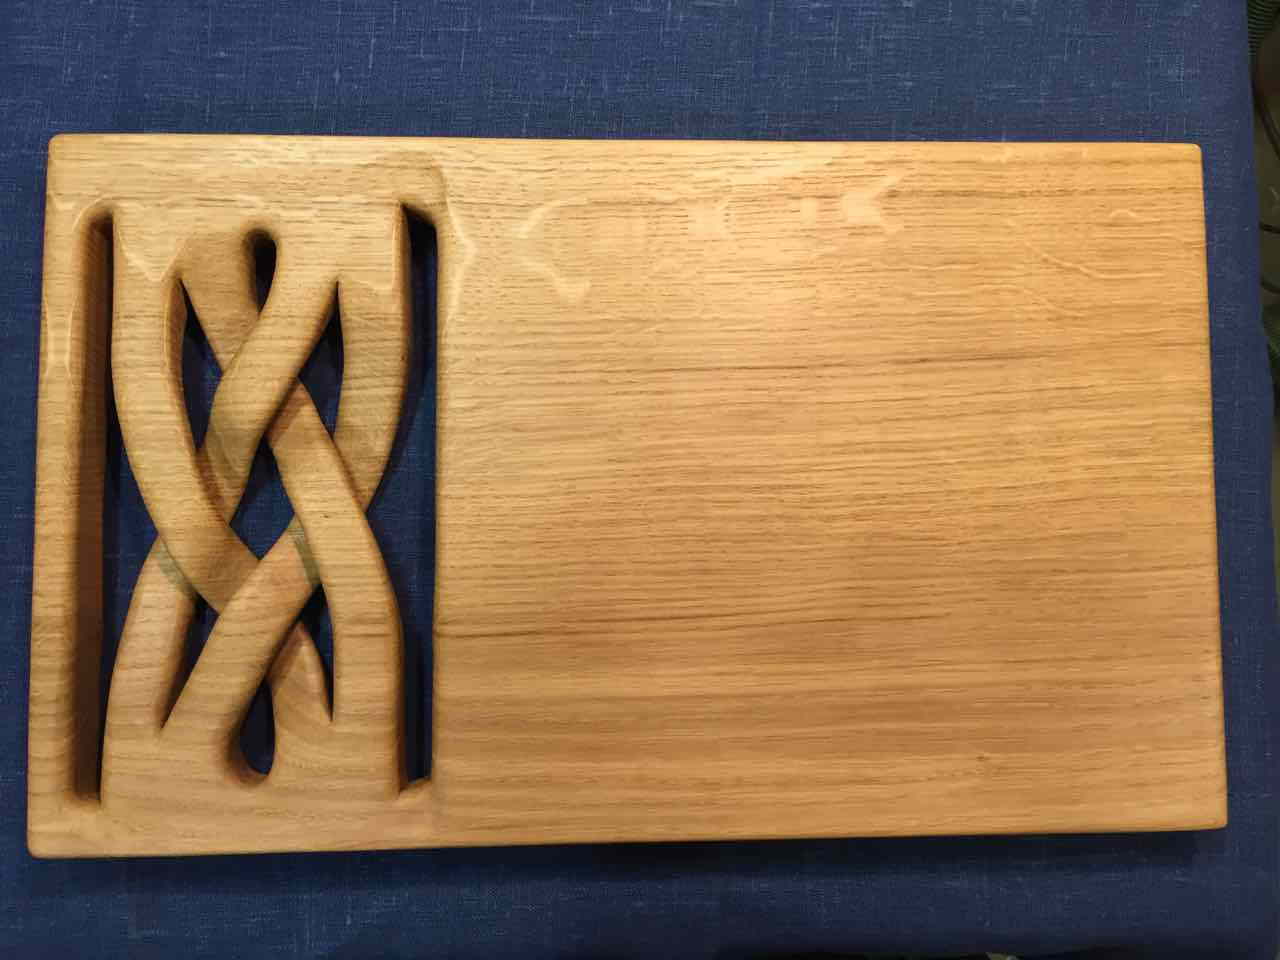 Cutting board with carved braid